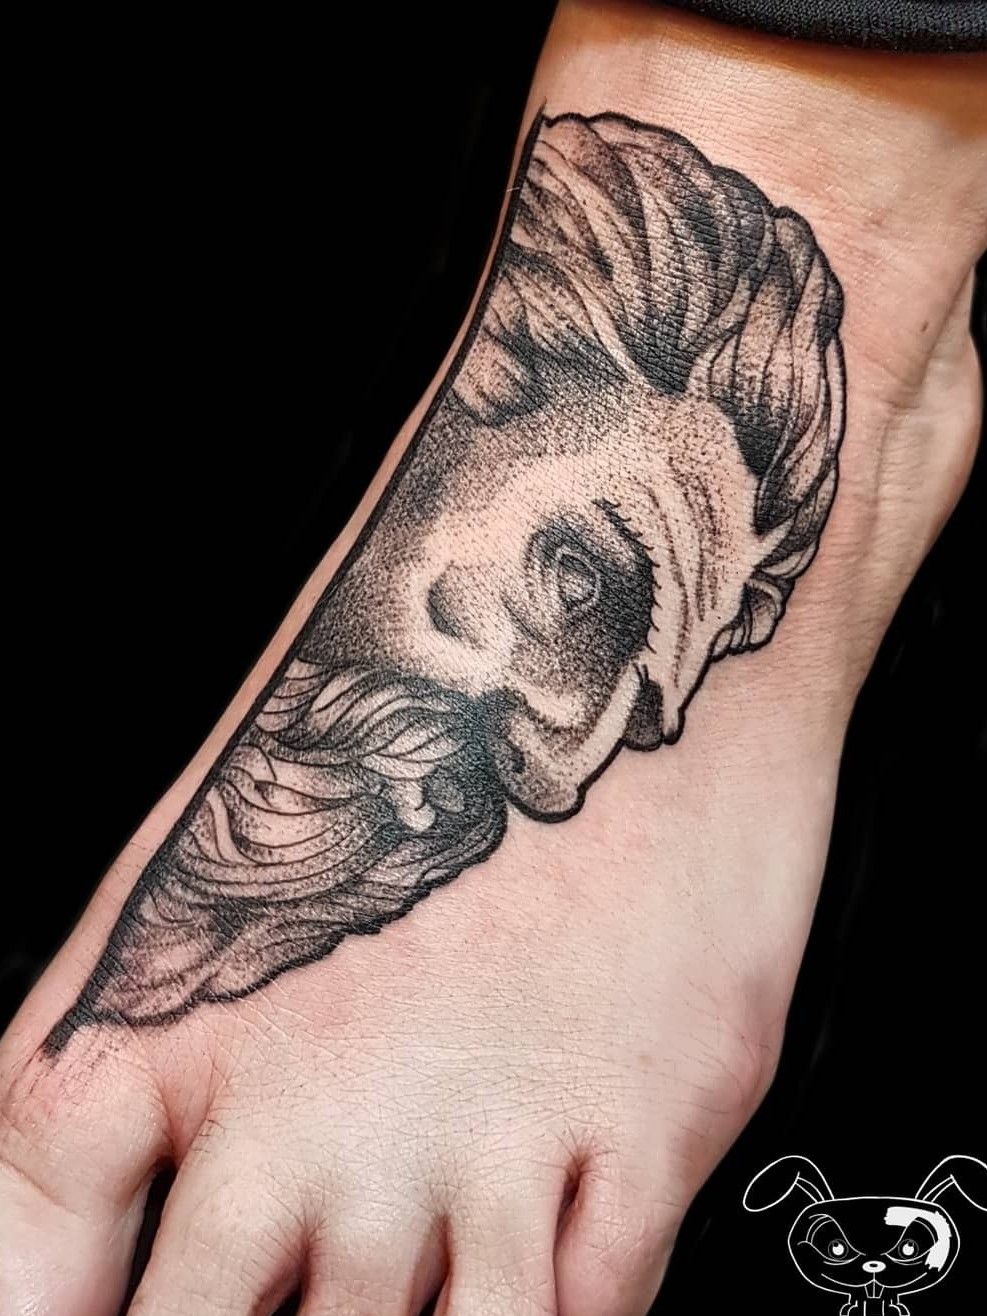 Greek Mythology Sleeve done by AxTheKid from Monarch Tattoo Studio in  Sydney Australia  rtattoos